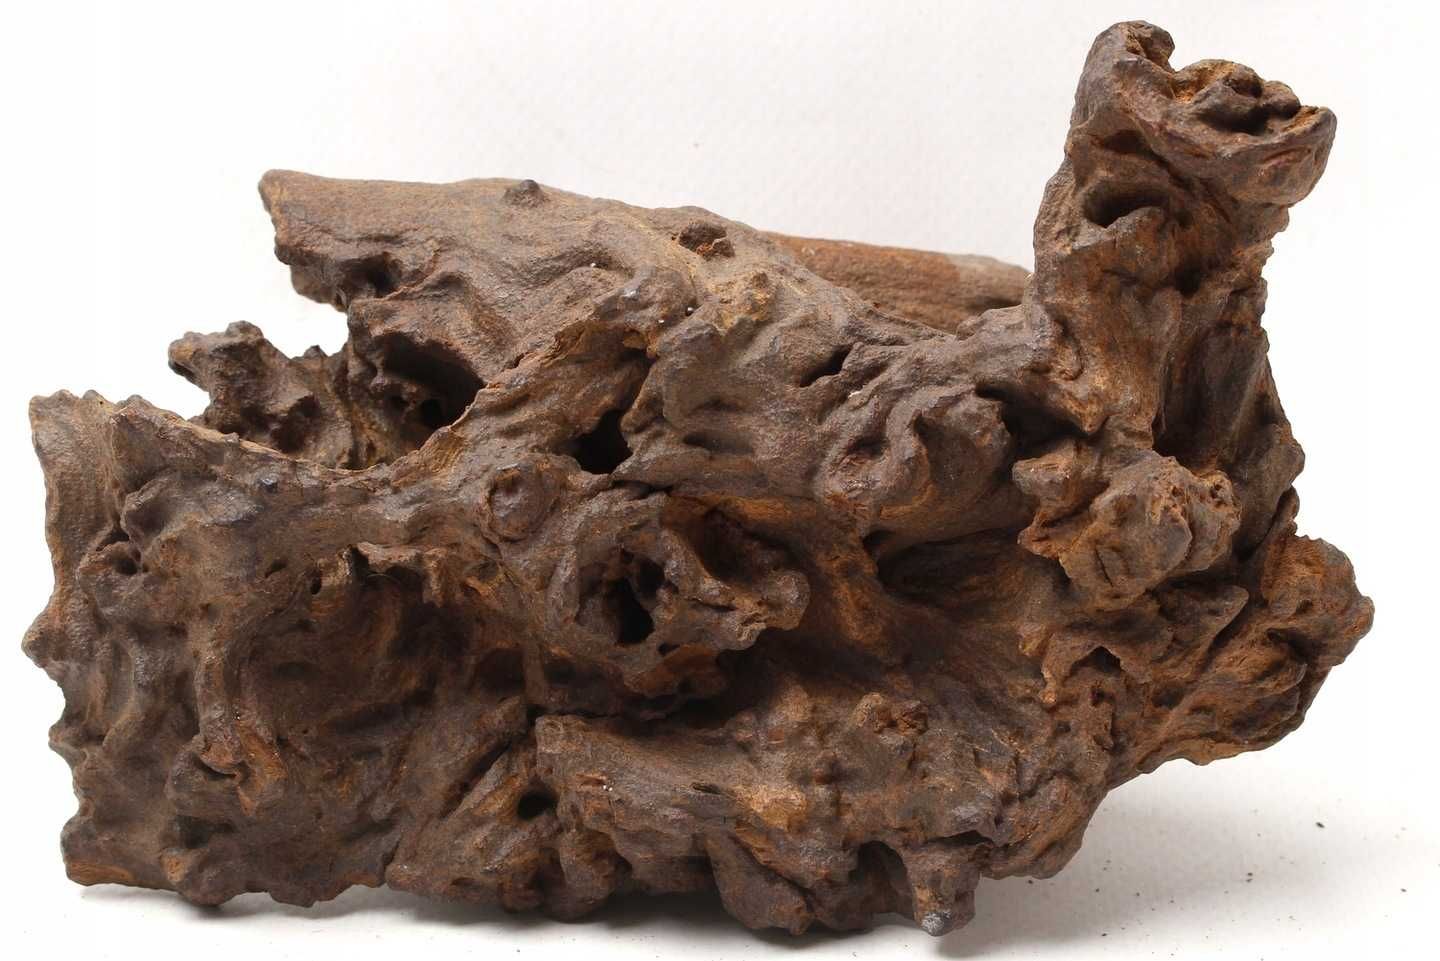 Naturalny Korzeń Iron korzeń afrykański 20-25cm do Akwarium Terrarium